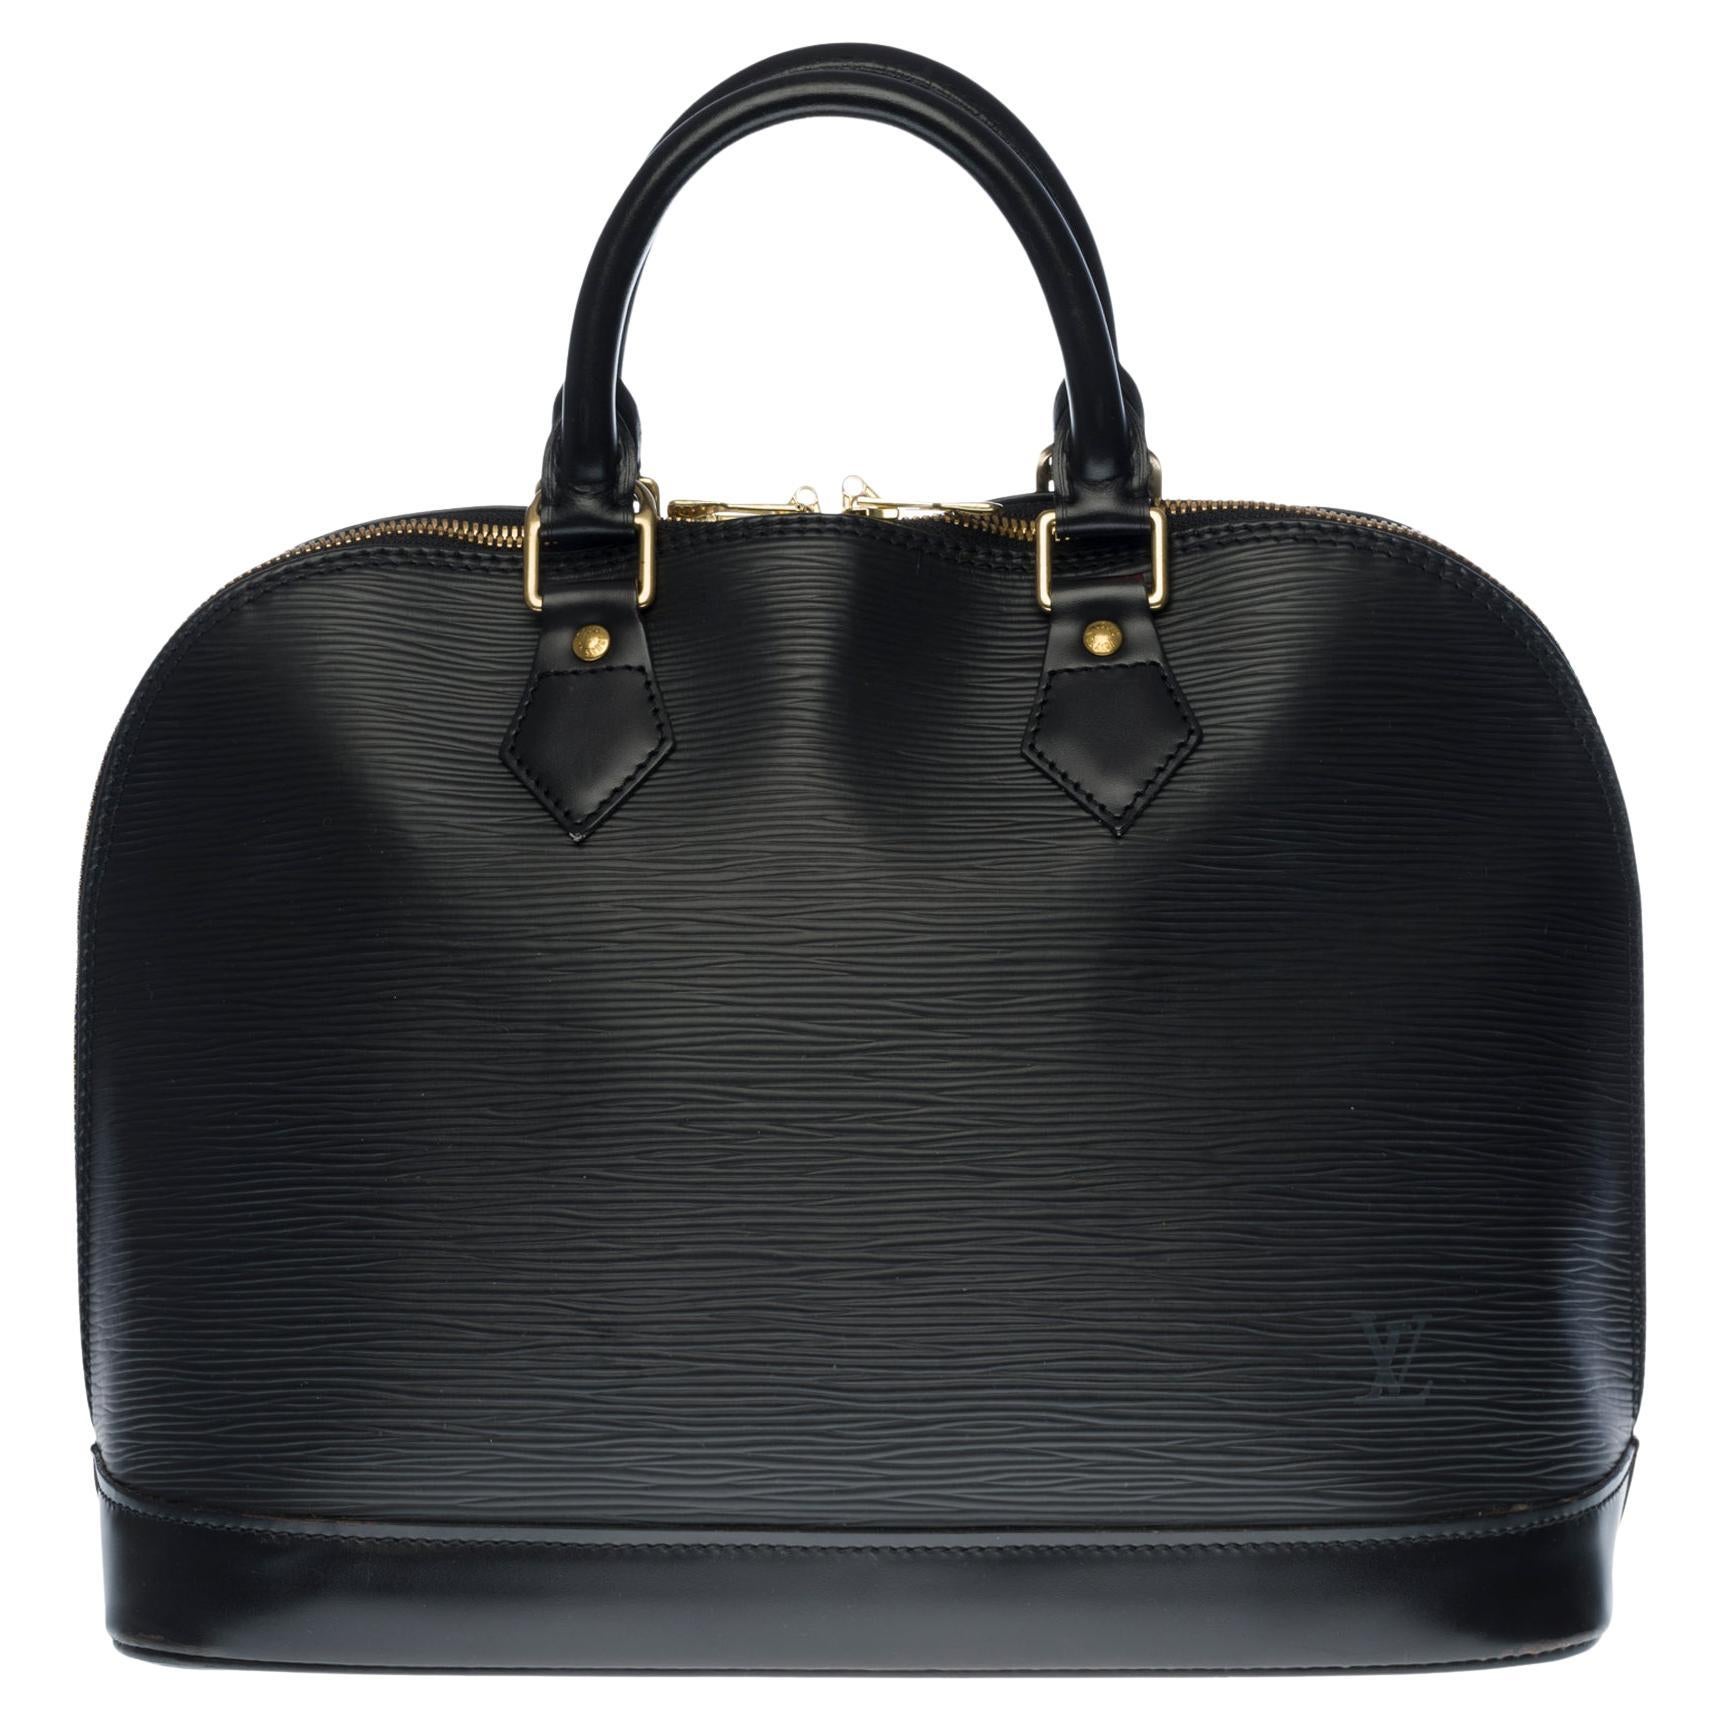 Louis Vuitton Alma handbag in black epi leather, GHW